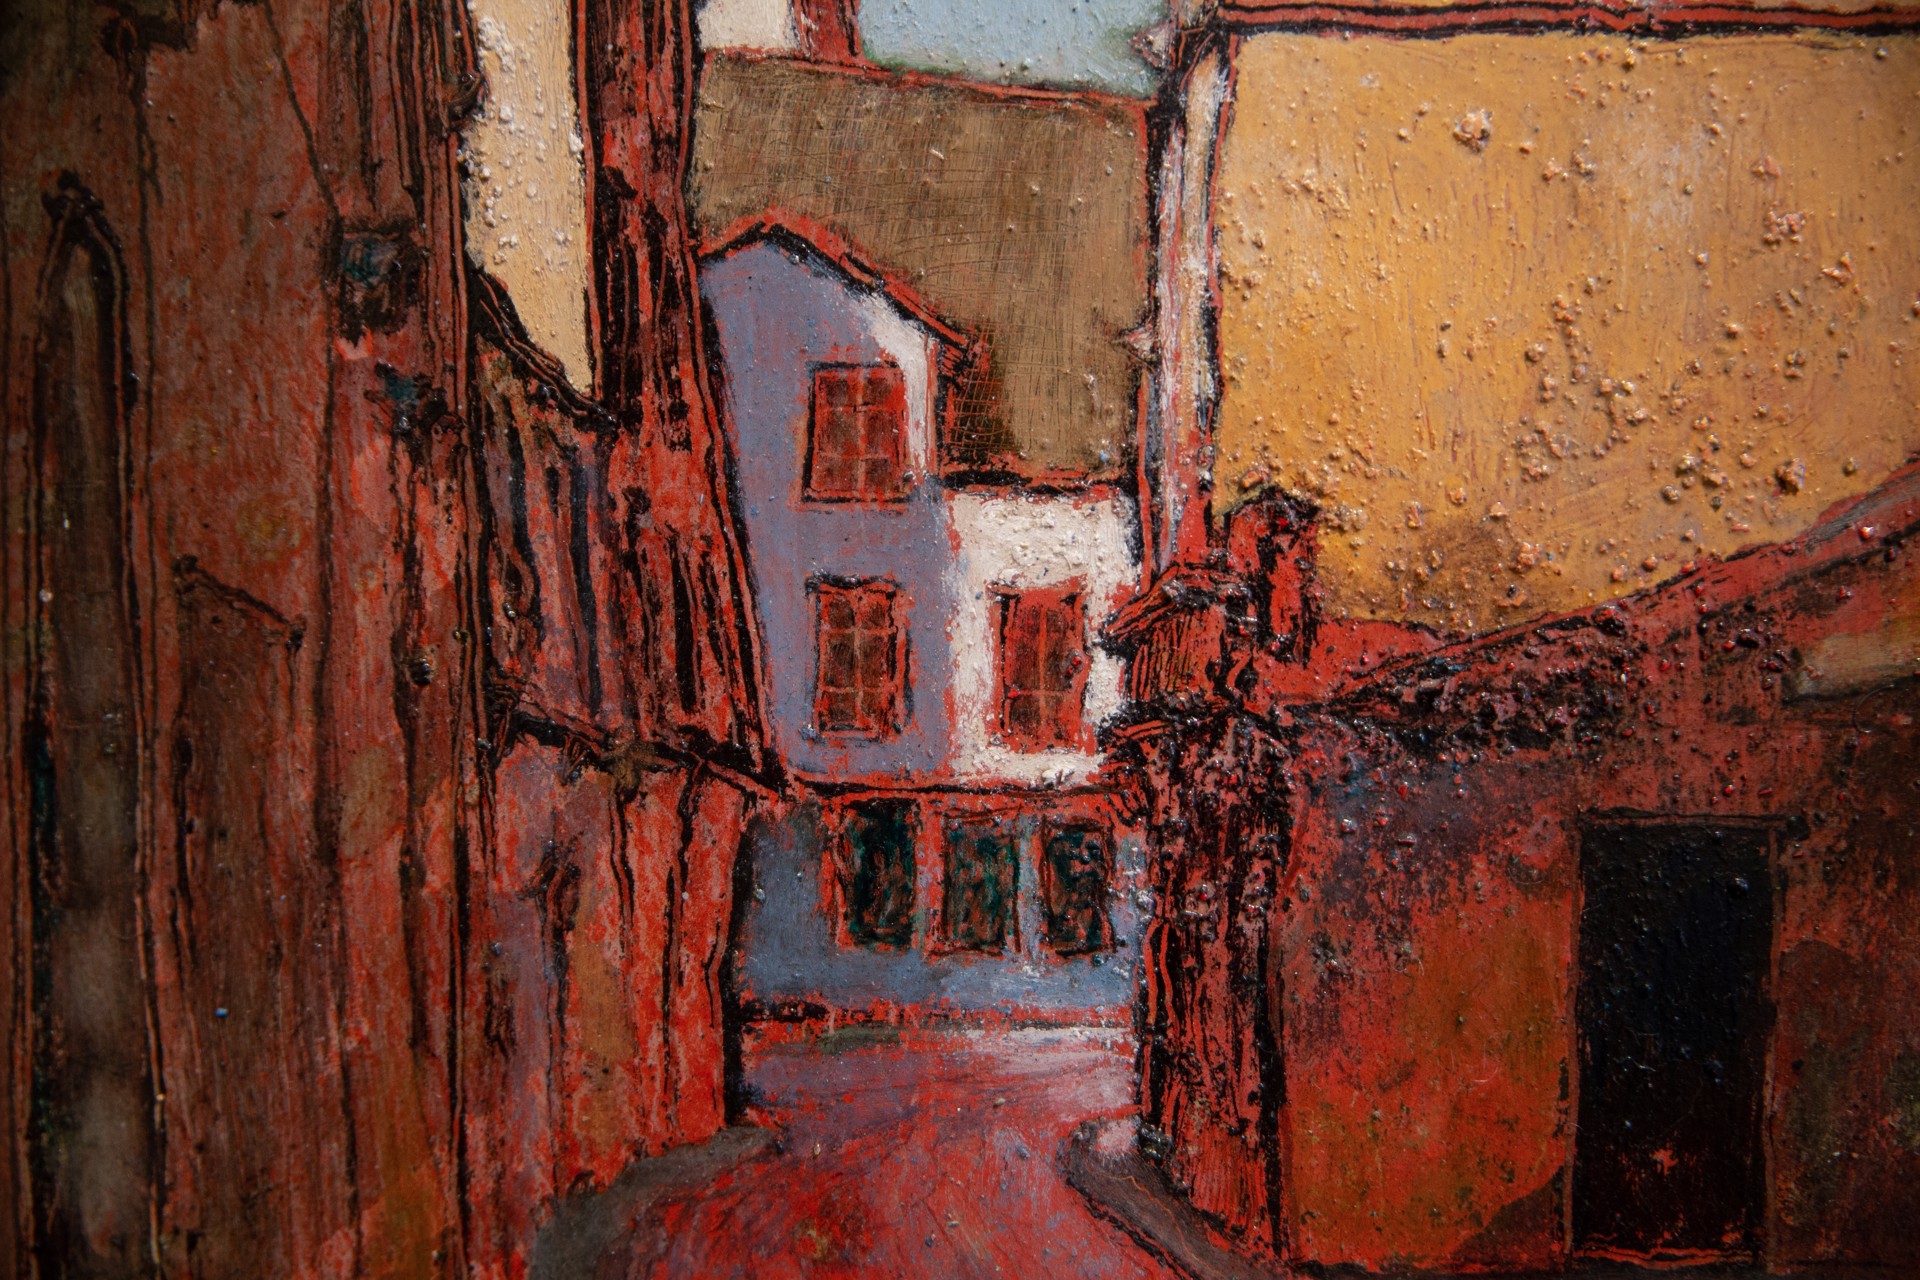 Rue Daubenton (at Rue Mouffetard) V by Andy Newman